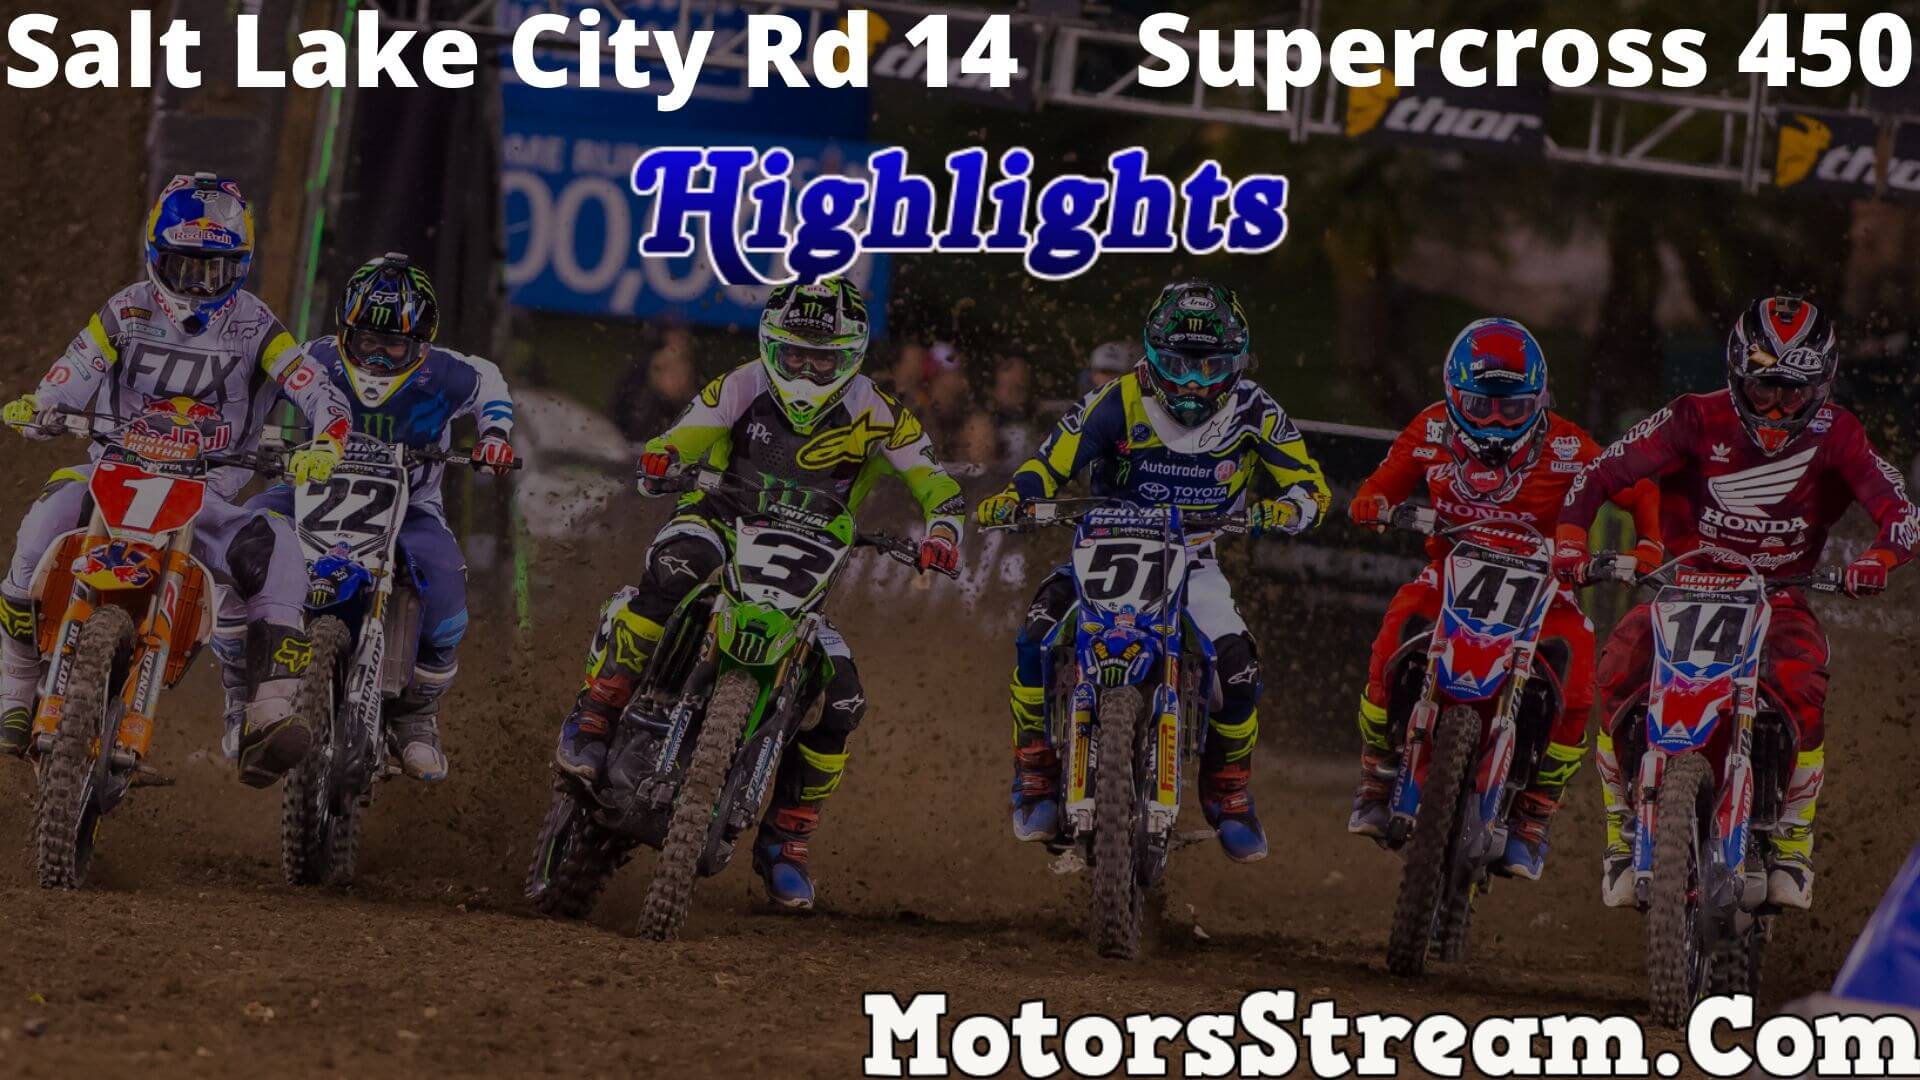 Super Lake City Rd 14 Highlights 2020 Supercross 450